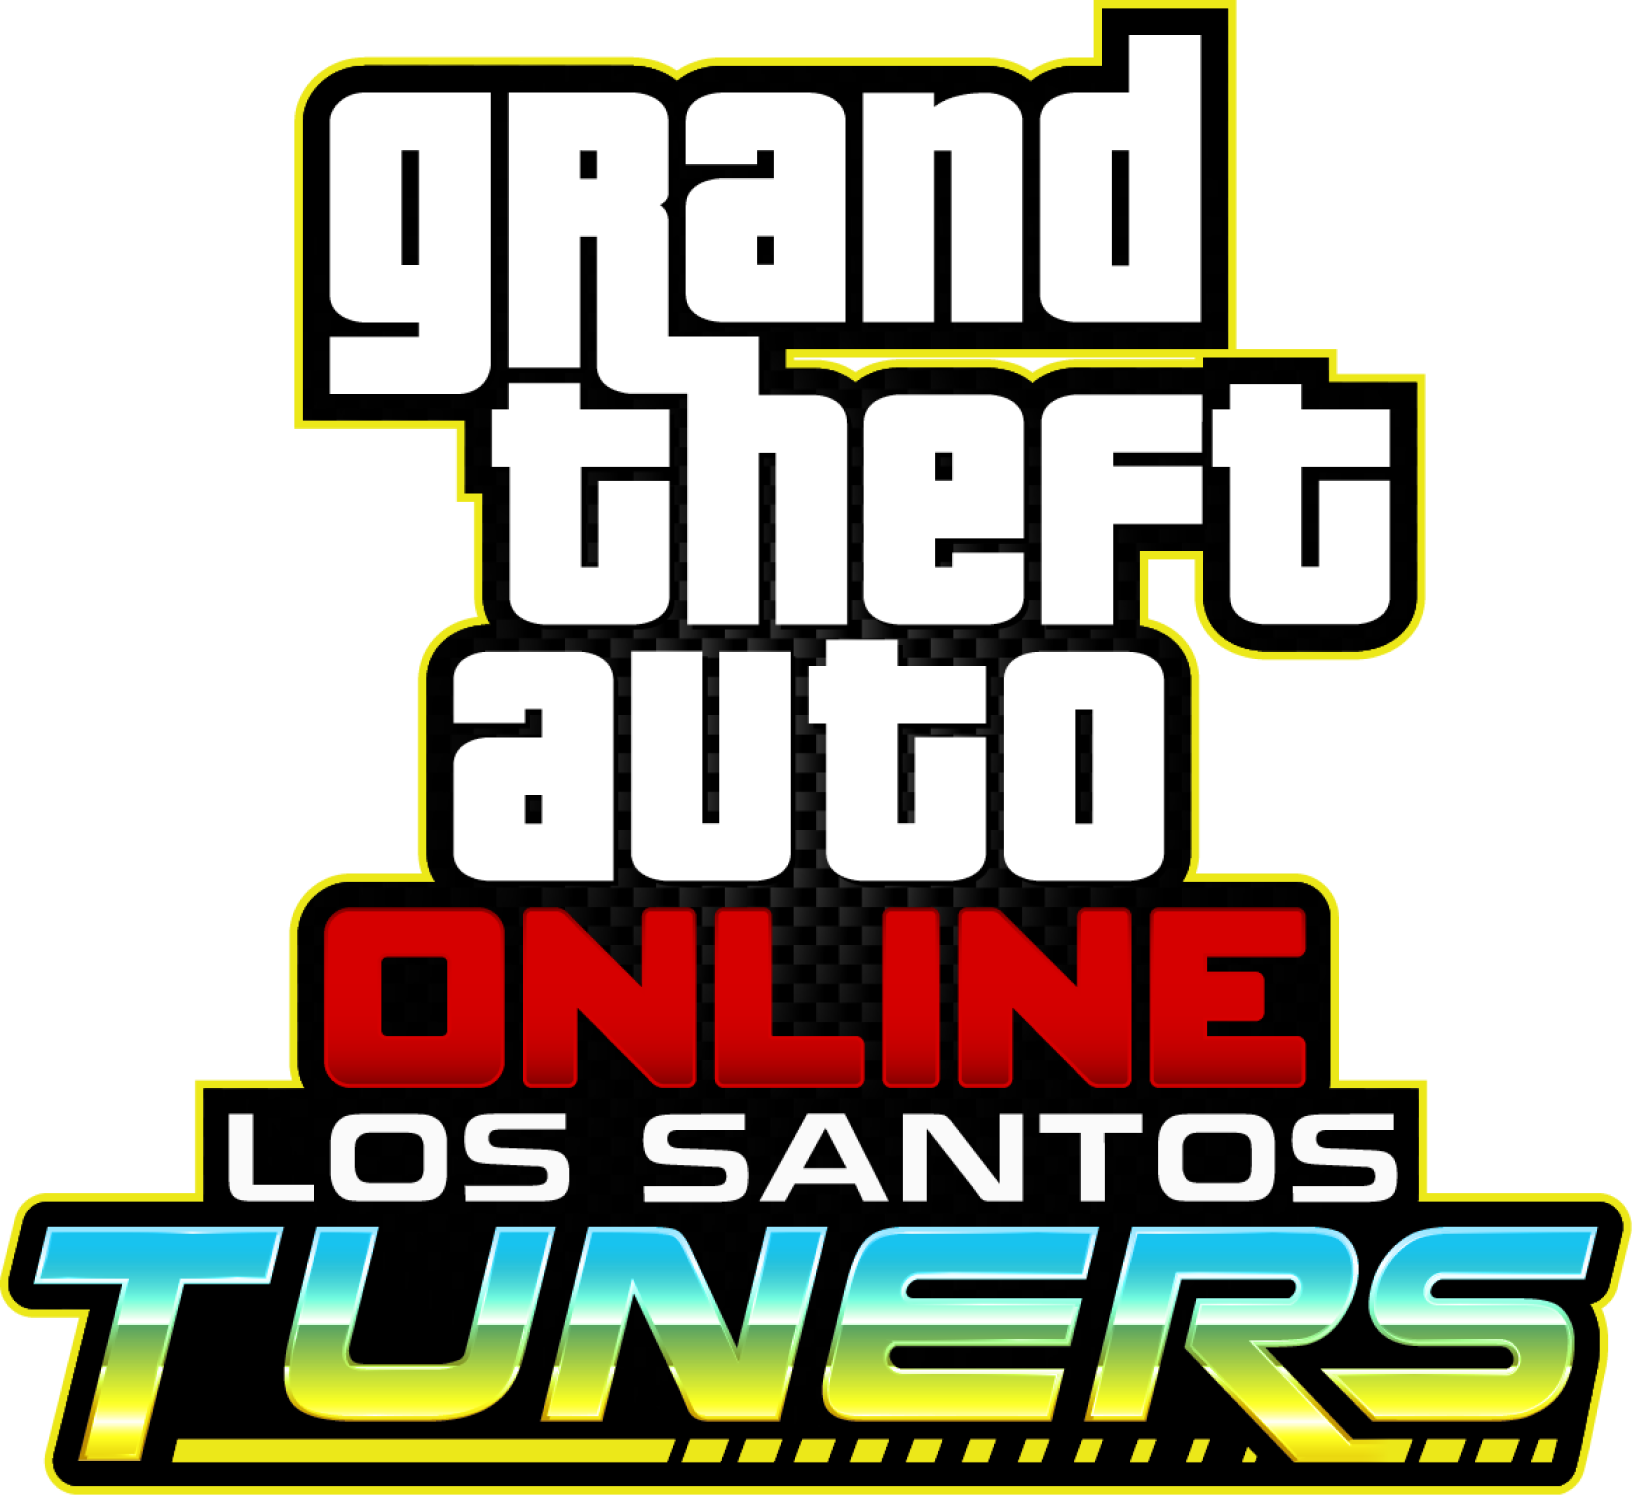 Grand Theft Auto V - Gta V para PS5 - Mídia Digital - Minutegames